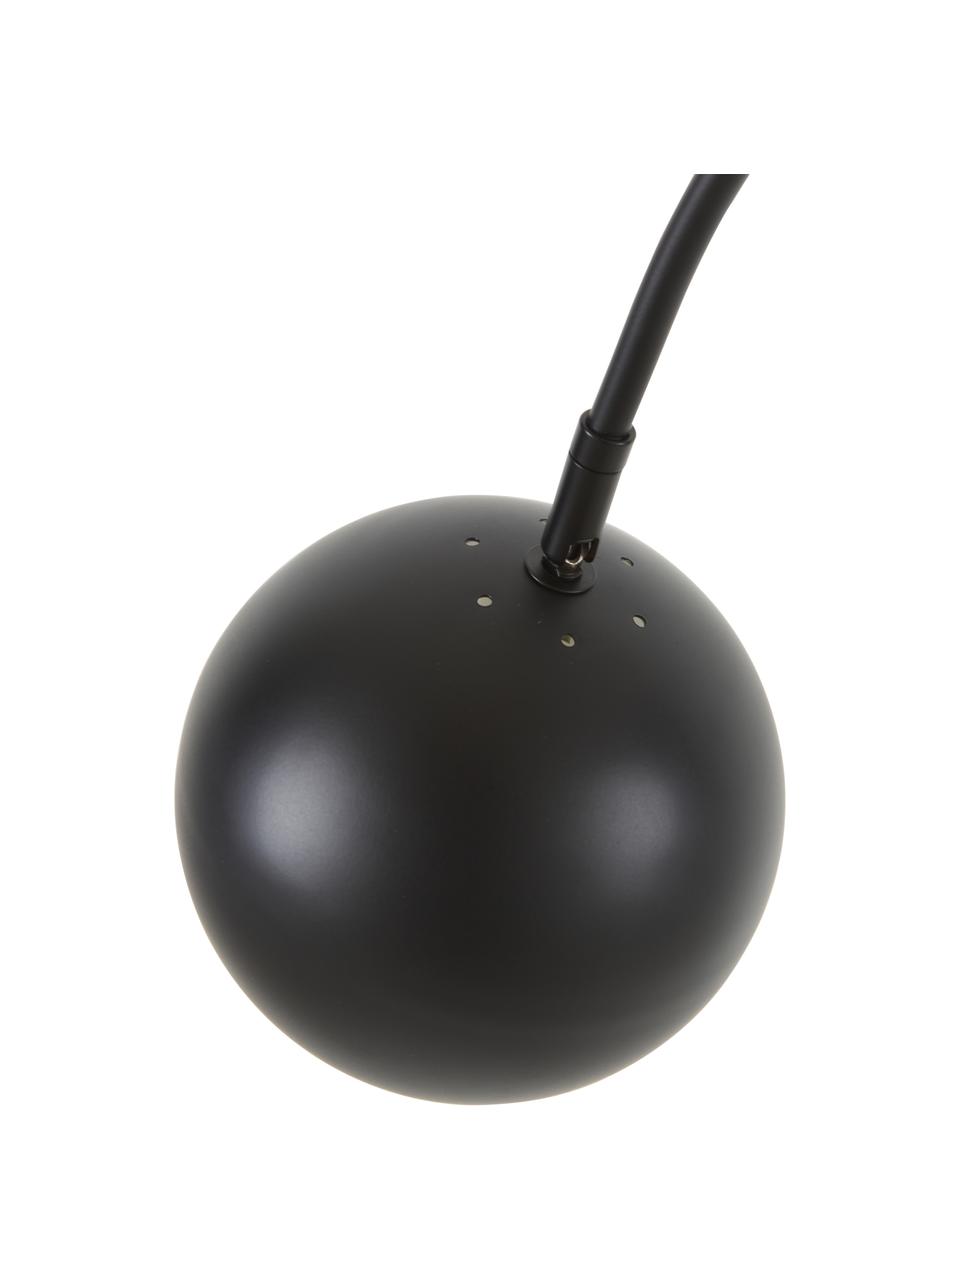 Leeslamp Vancouver in zwart, Lampenkap: gepoedercoat metaal, Lampvoet: gepoedercoat metaal, Zwart, D 43 x H 142 cm